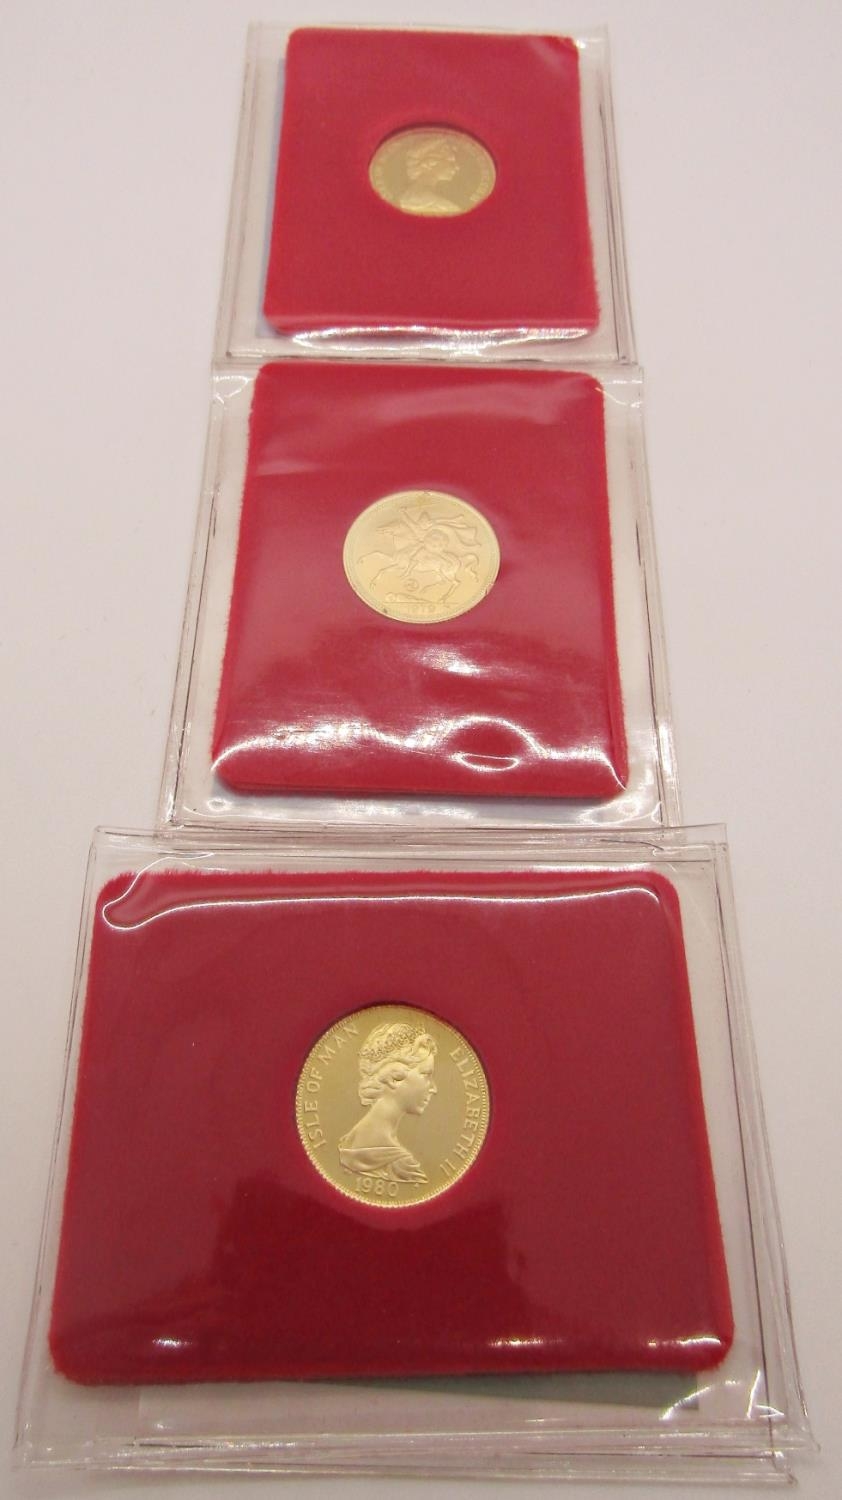 Three x Isle of Man sovereigns, 2 x 1979, 1 x 1980, limited to 50,000 copies - Pobjoy Mint